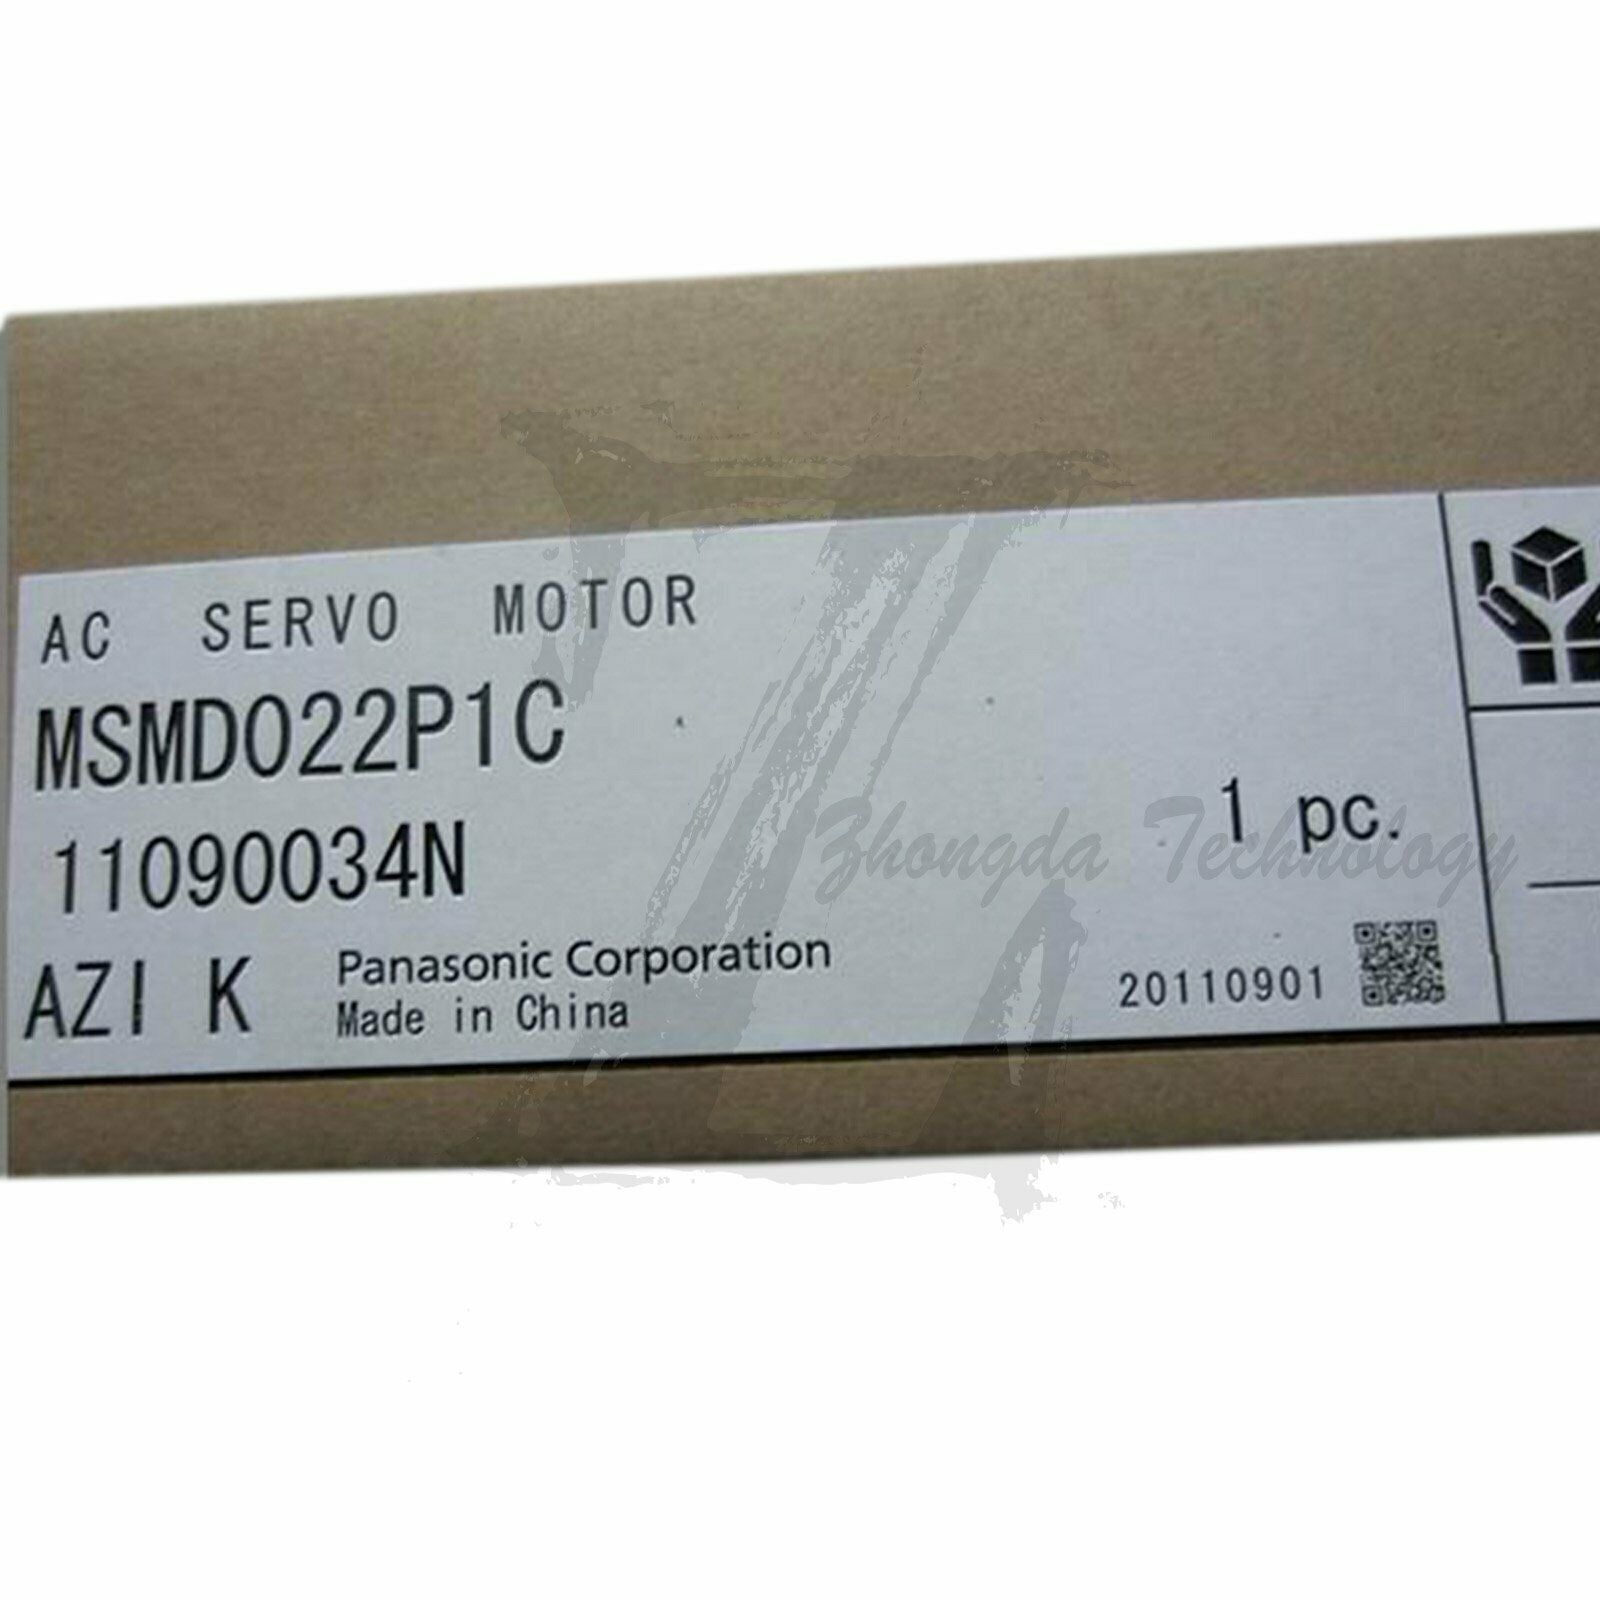 New In Box 1PC Panasonic MSMD022P1C servo motor